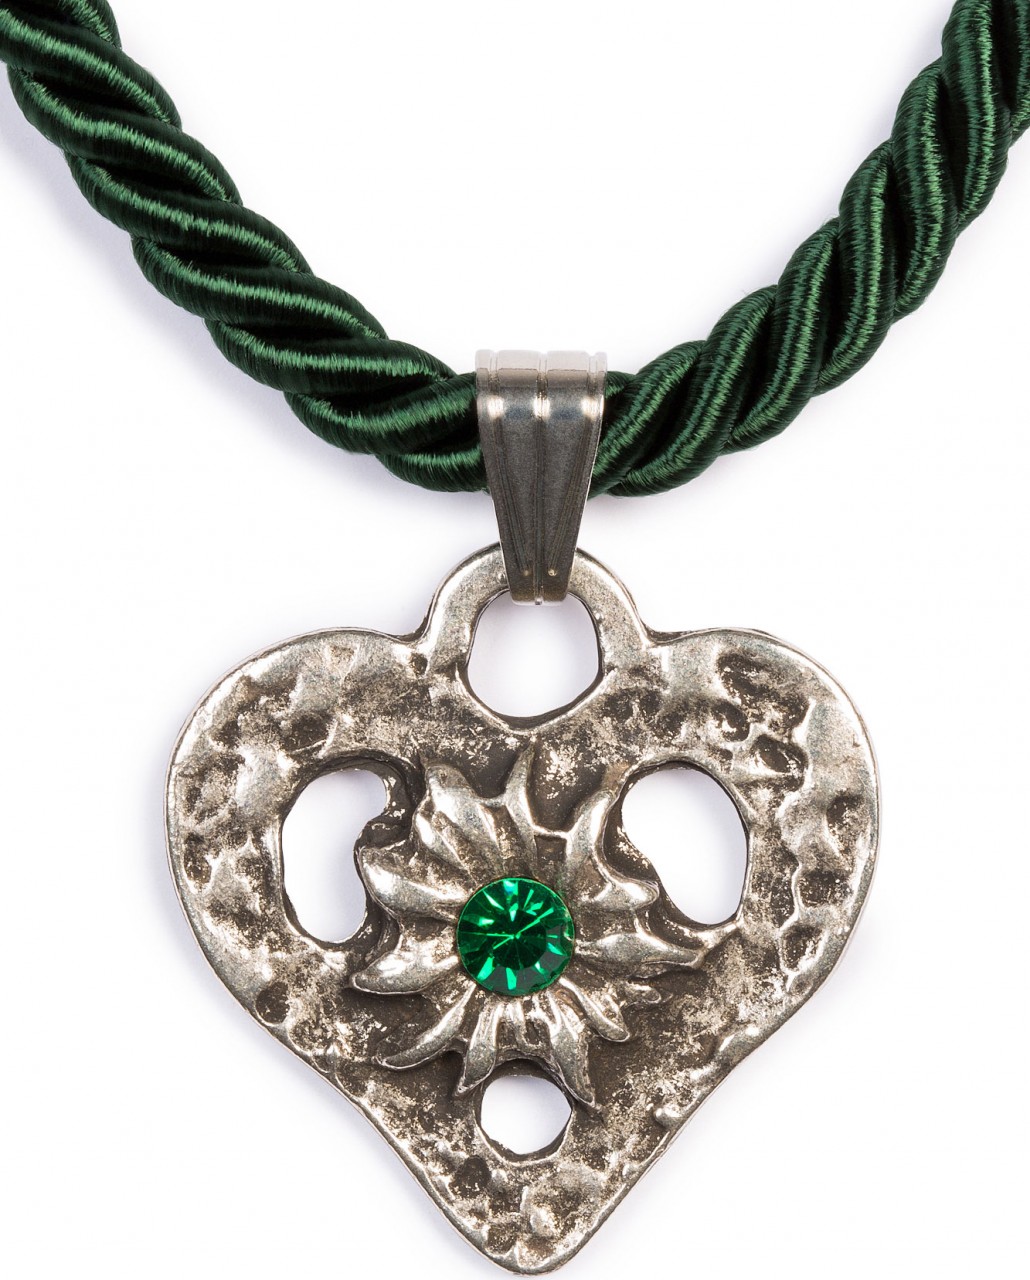 Braid Necklace with Heart Pendant, Fir Green